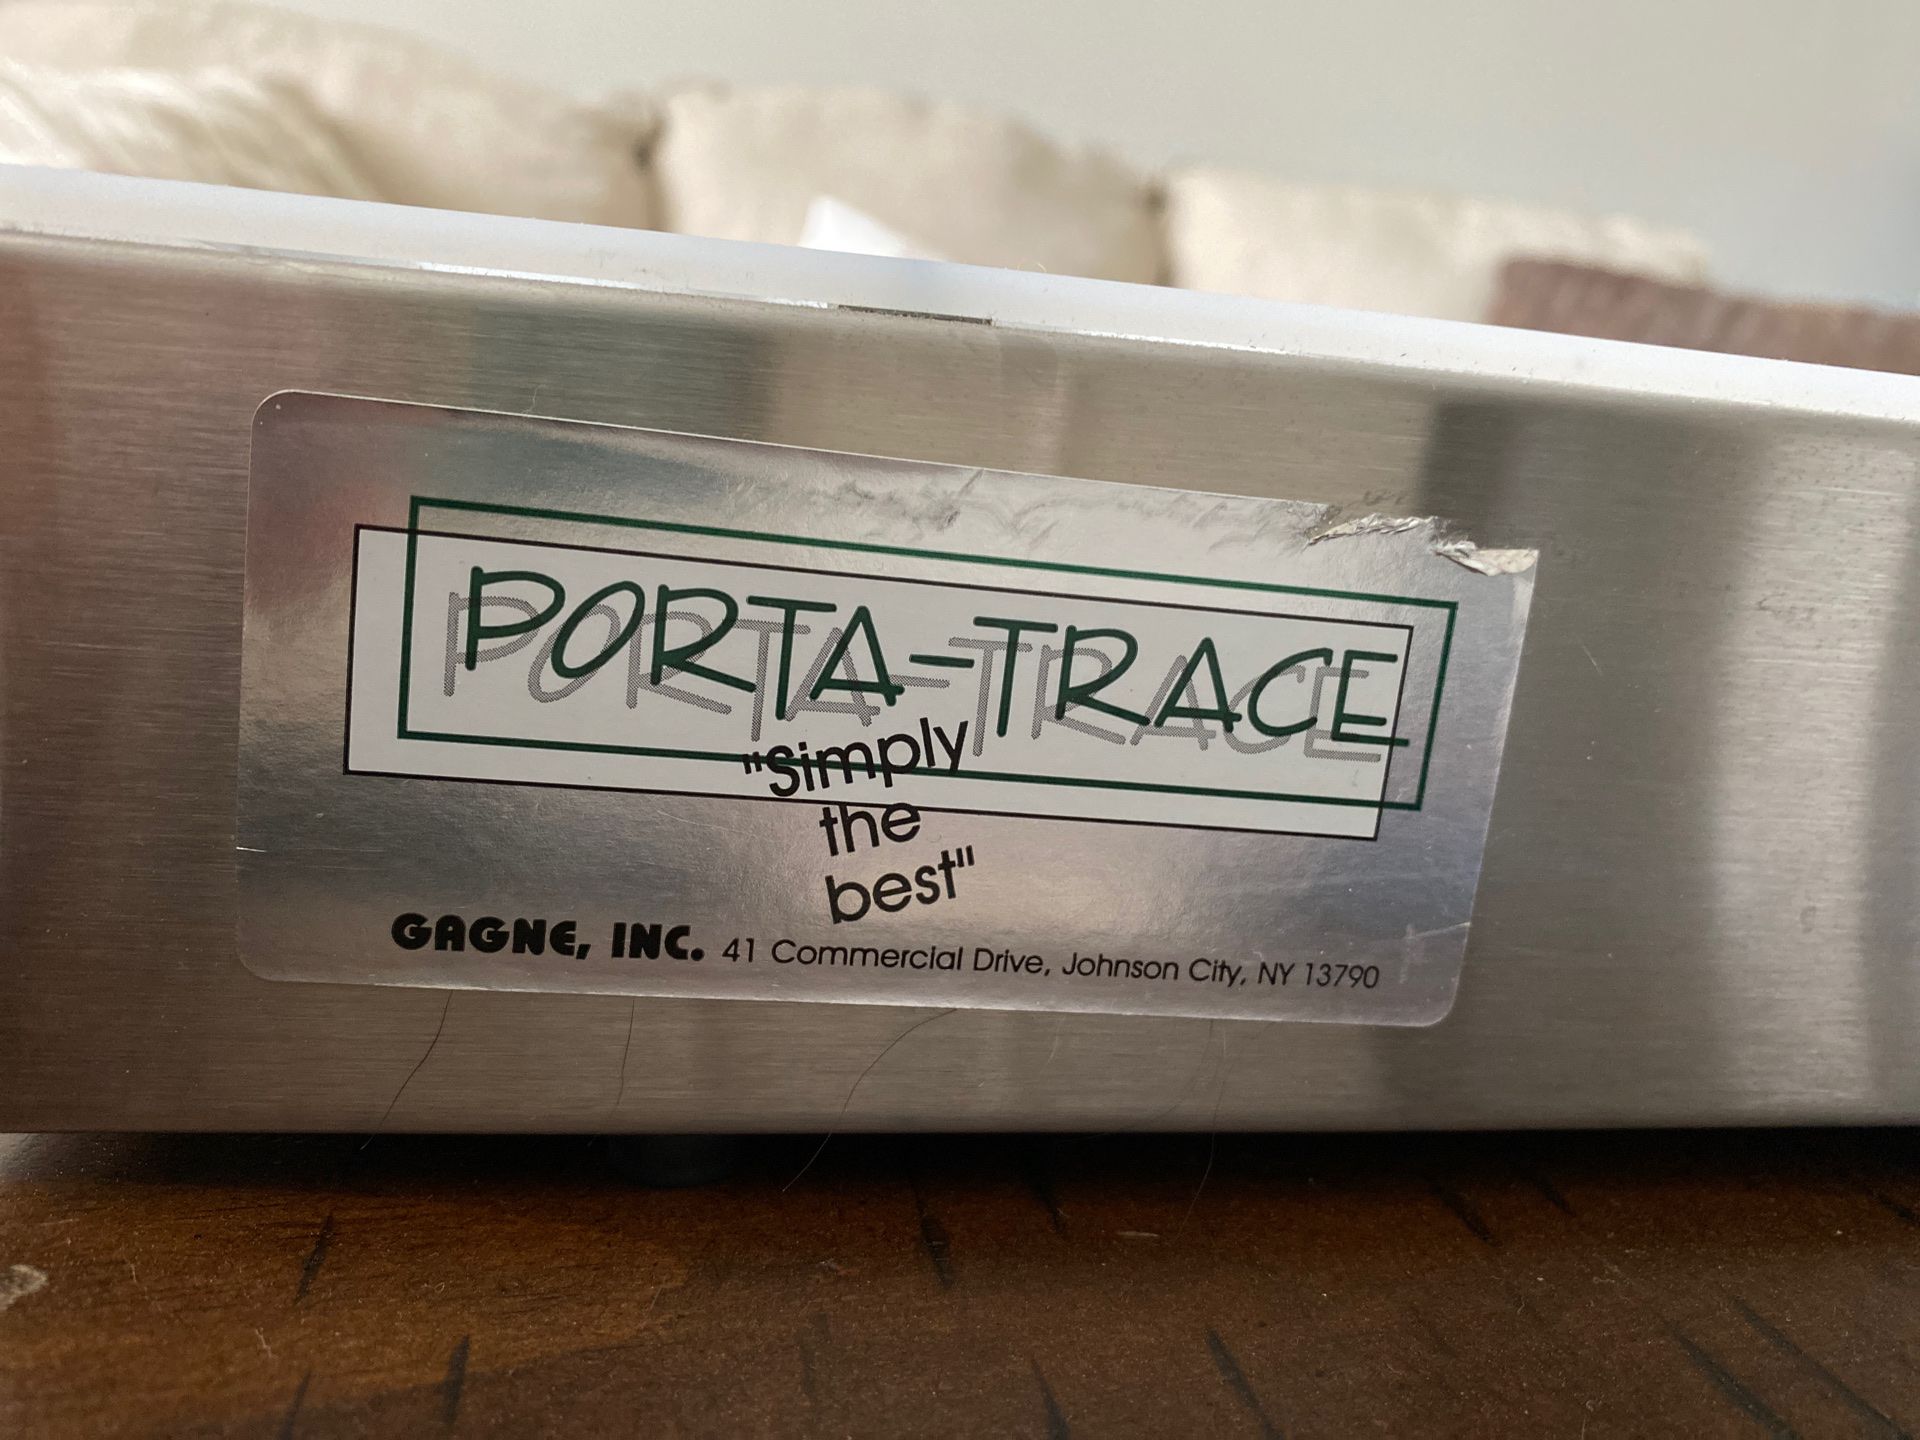 PORTA-Trace light box